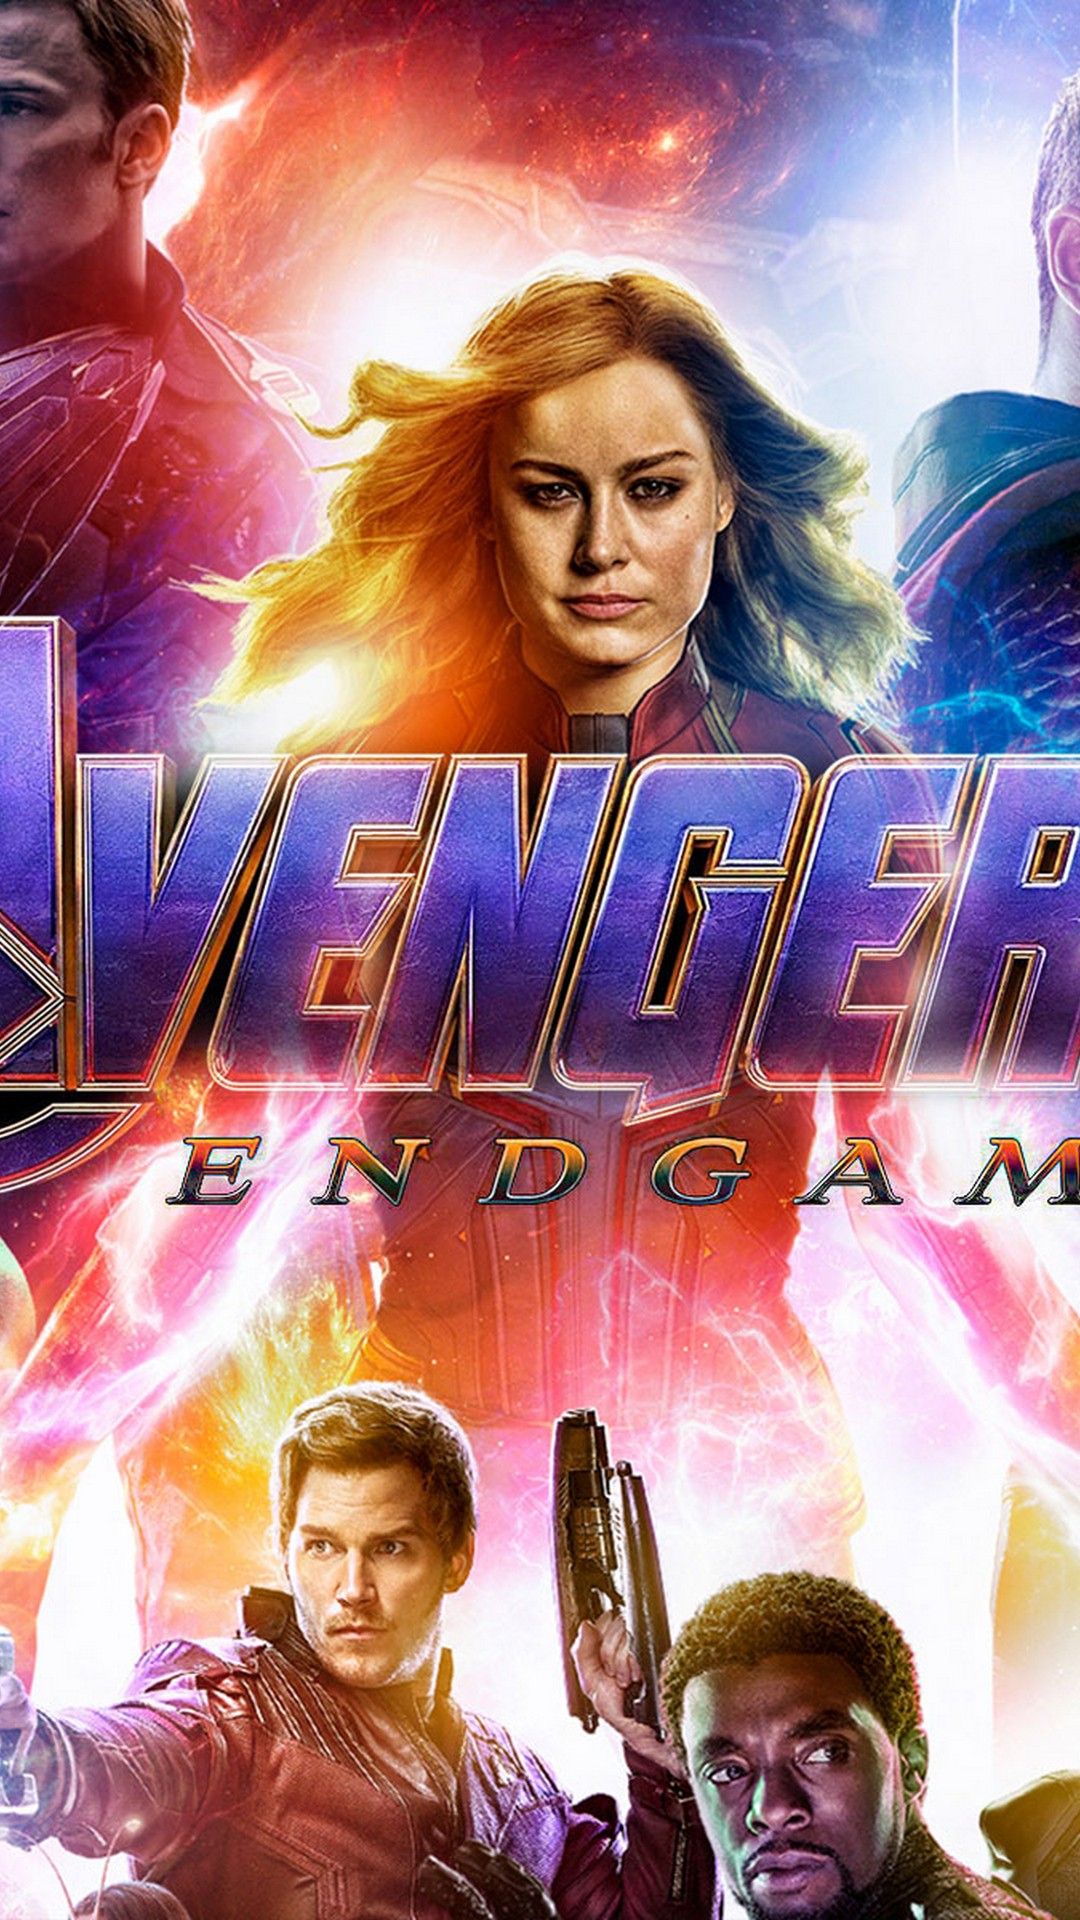 Avengers Endgame Android Wallpaper - 2019 fondos de pantalla de Android